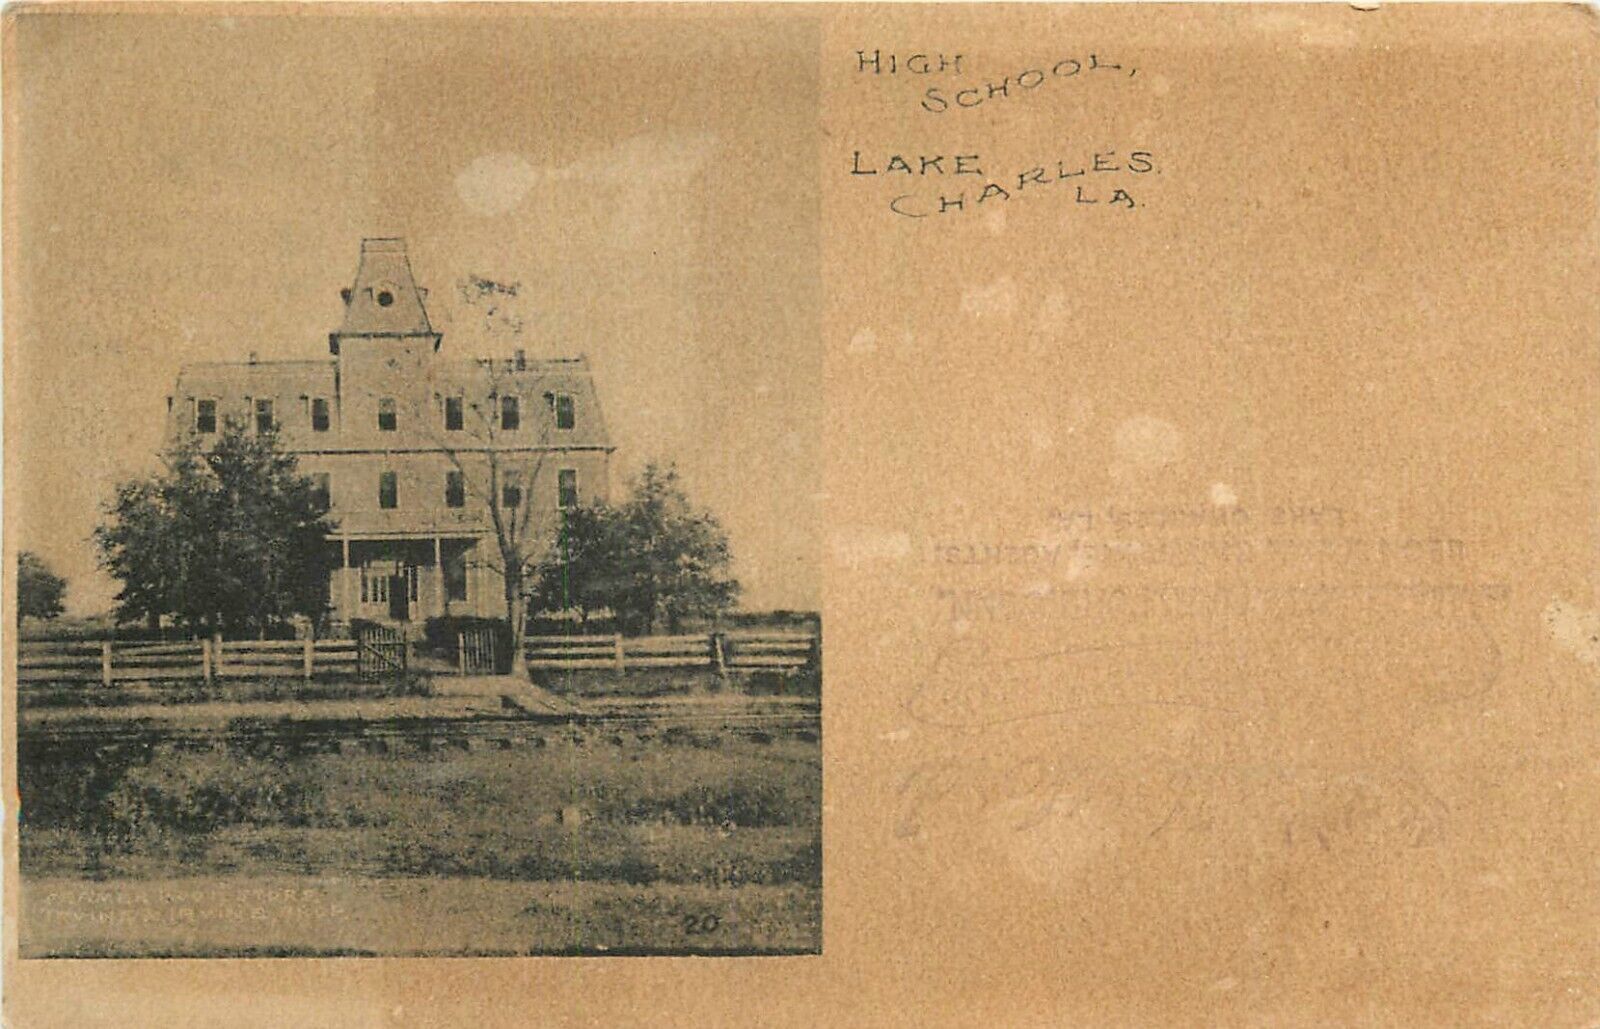 c1905 High School, Lake Charles, Louisiana Postcard